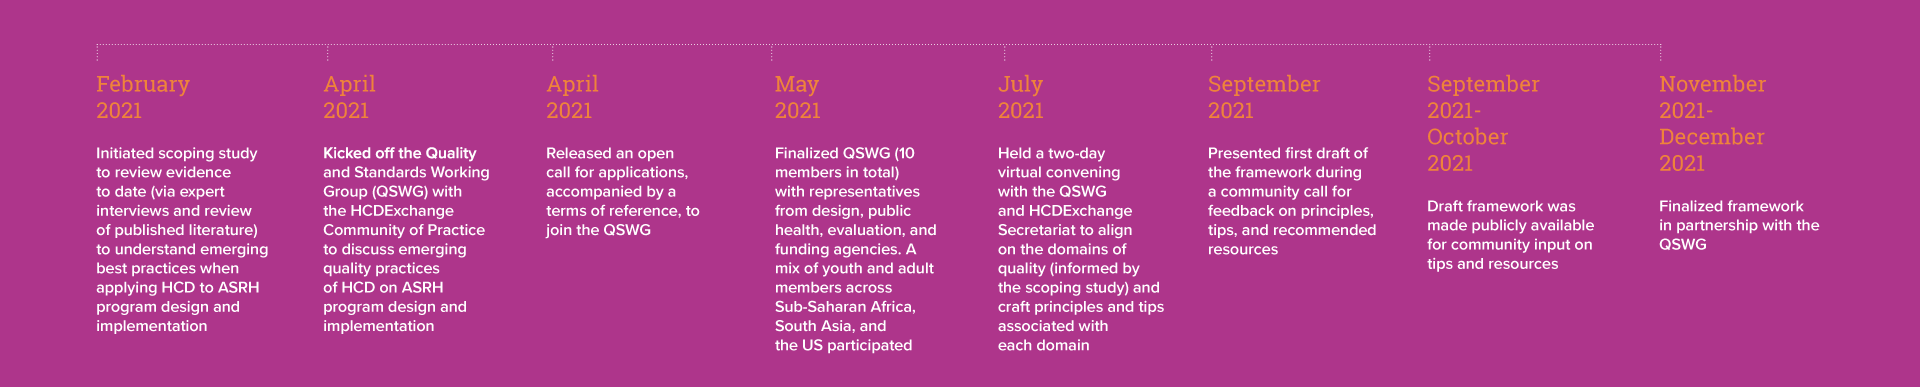 Timeline for the QSW Framework